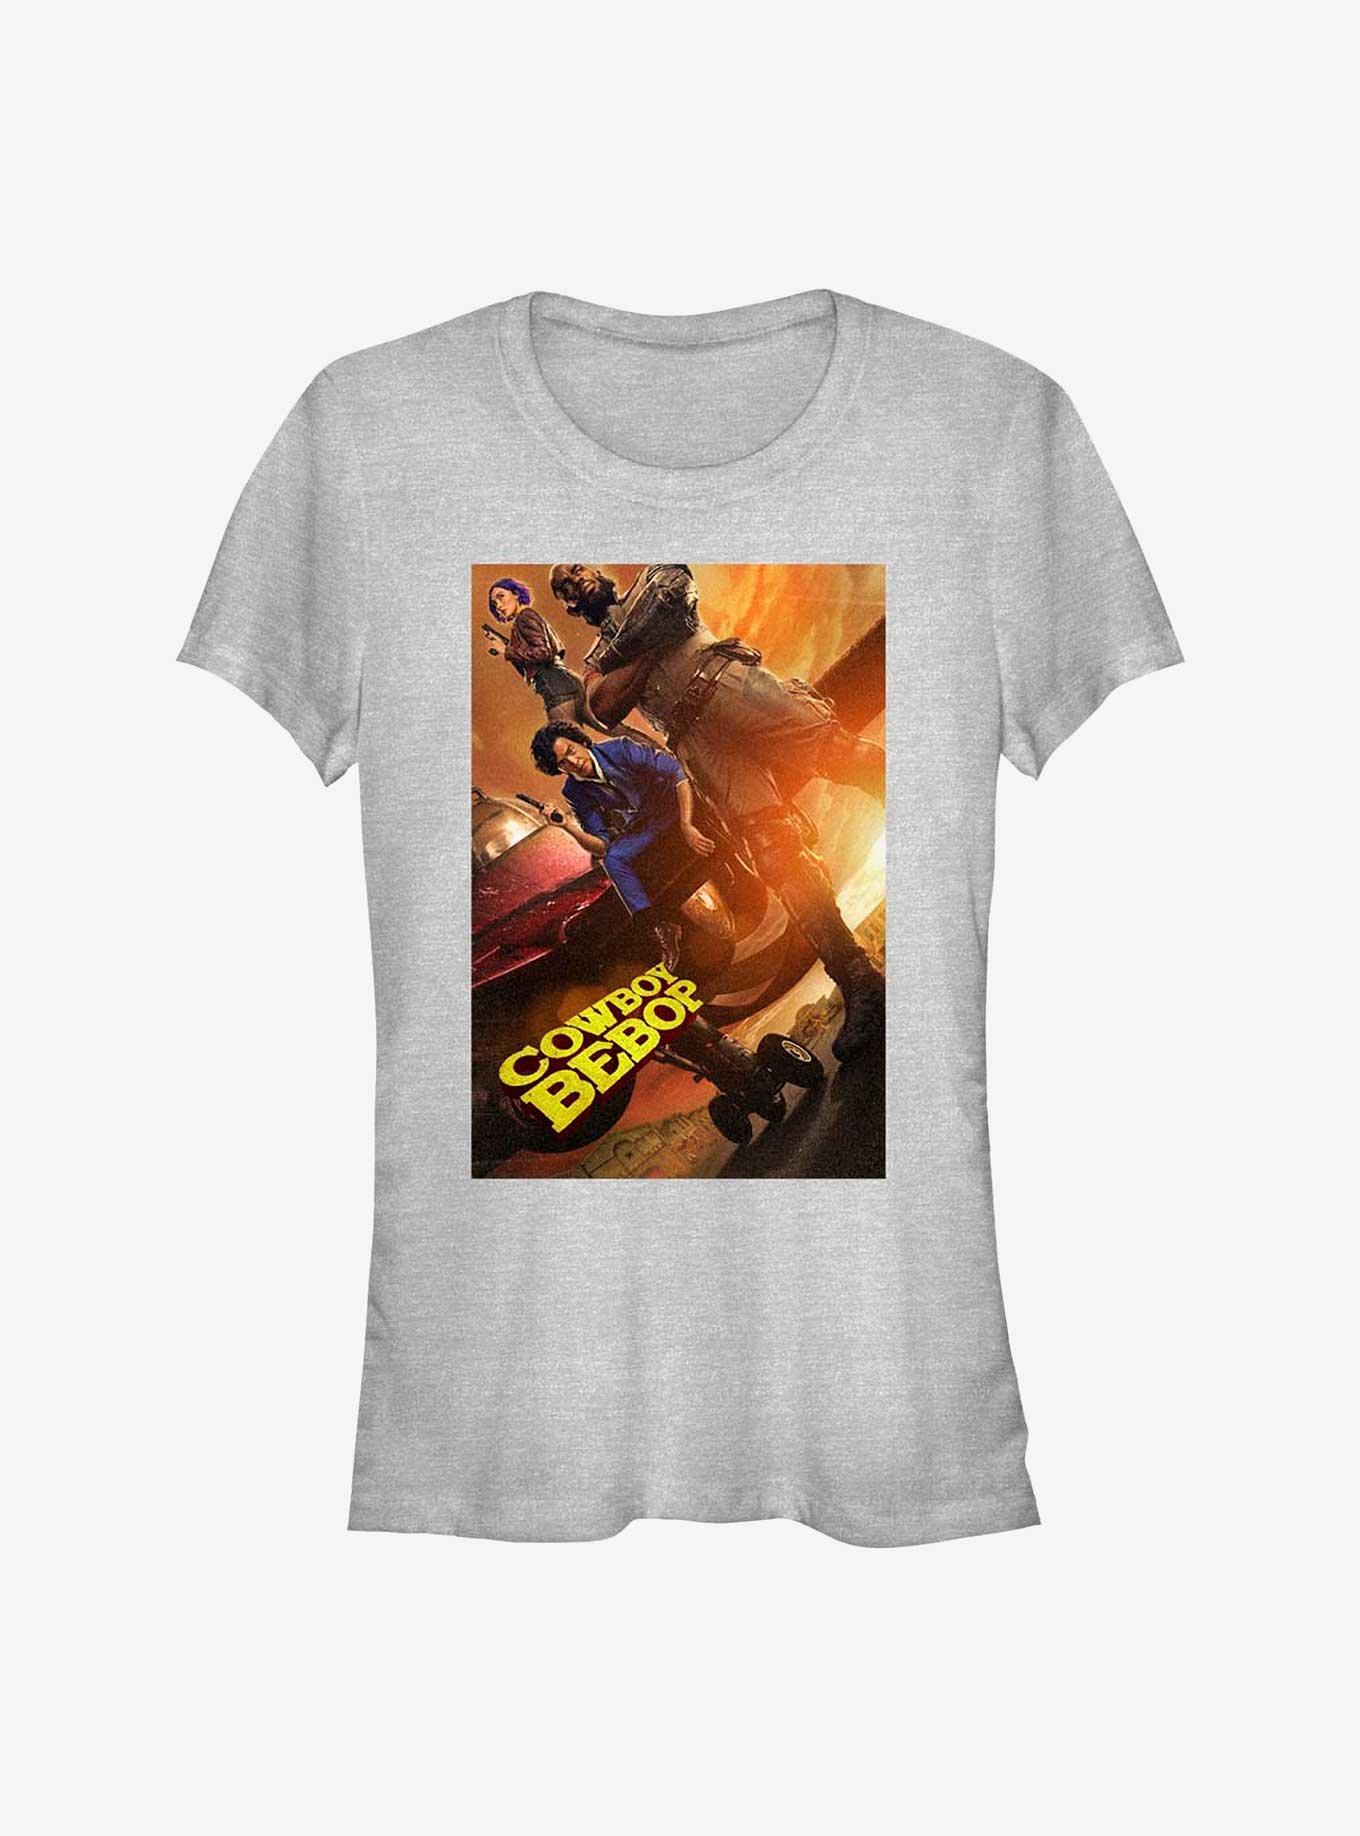 Cowboy Bebop Crew Girl's T-Shirt